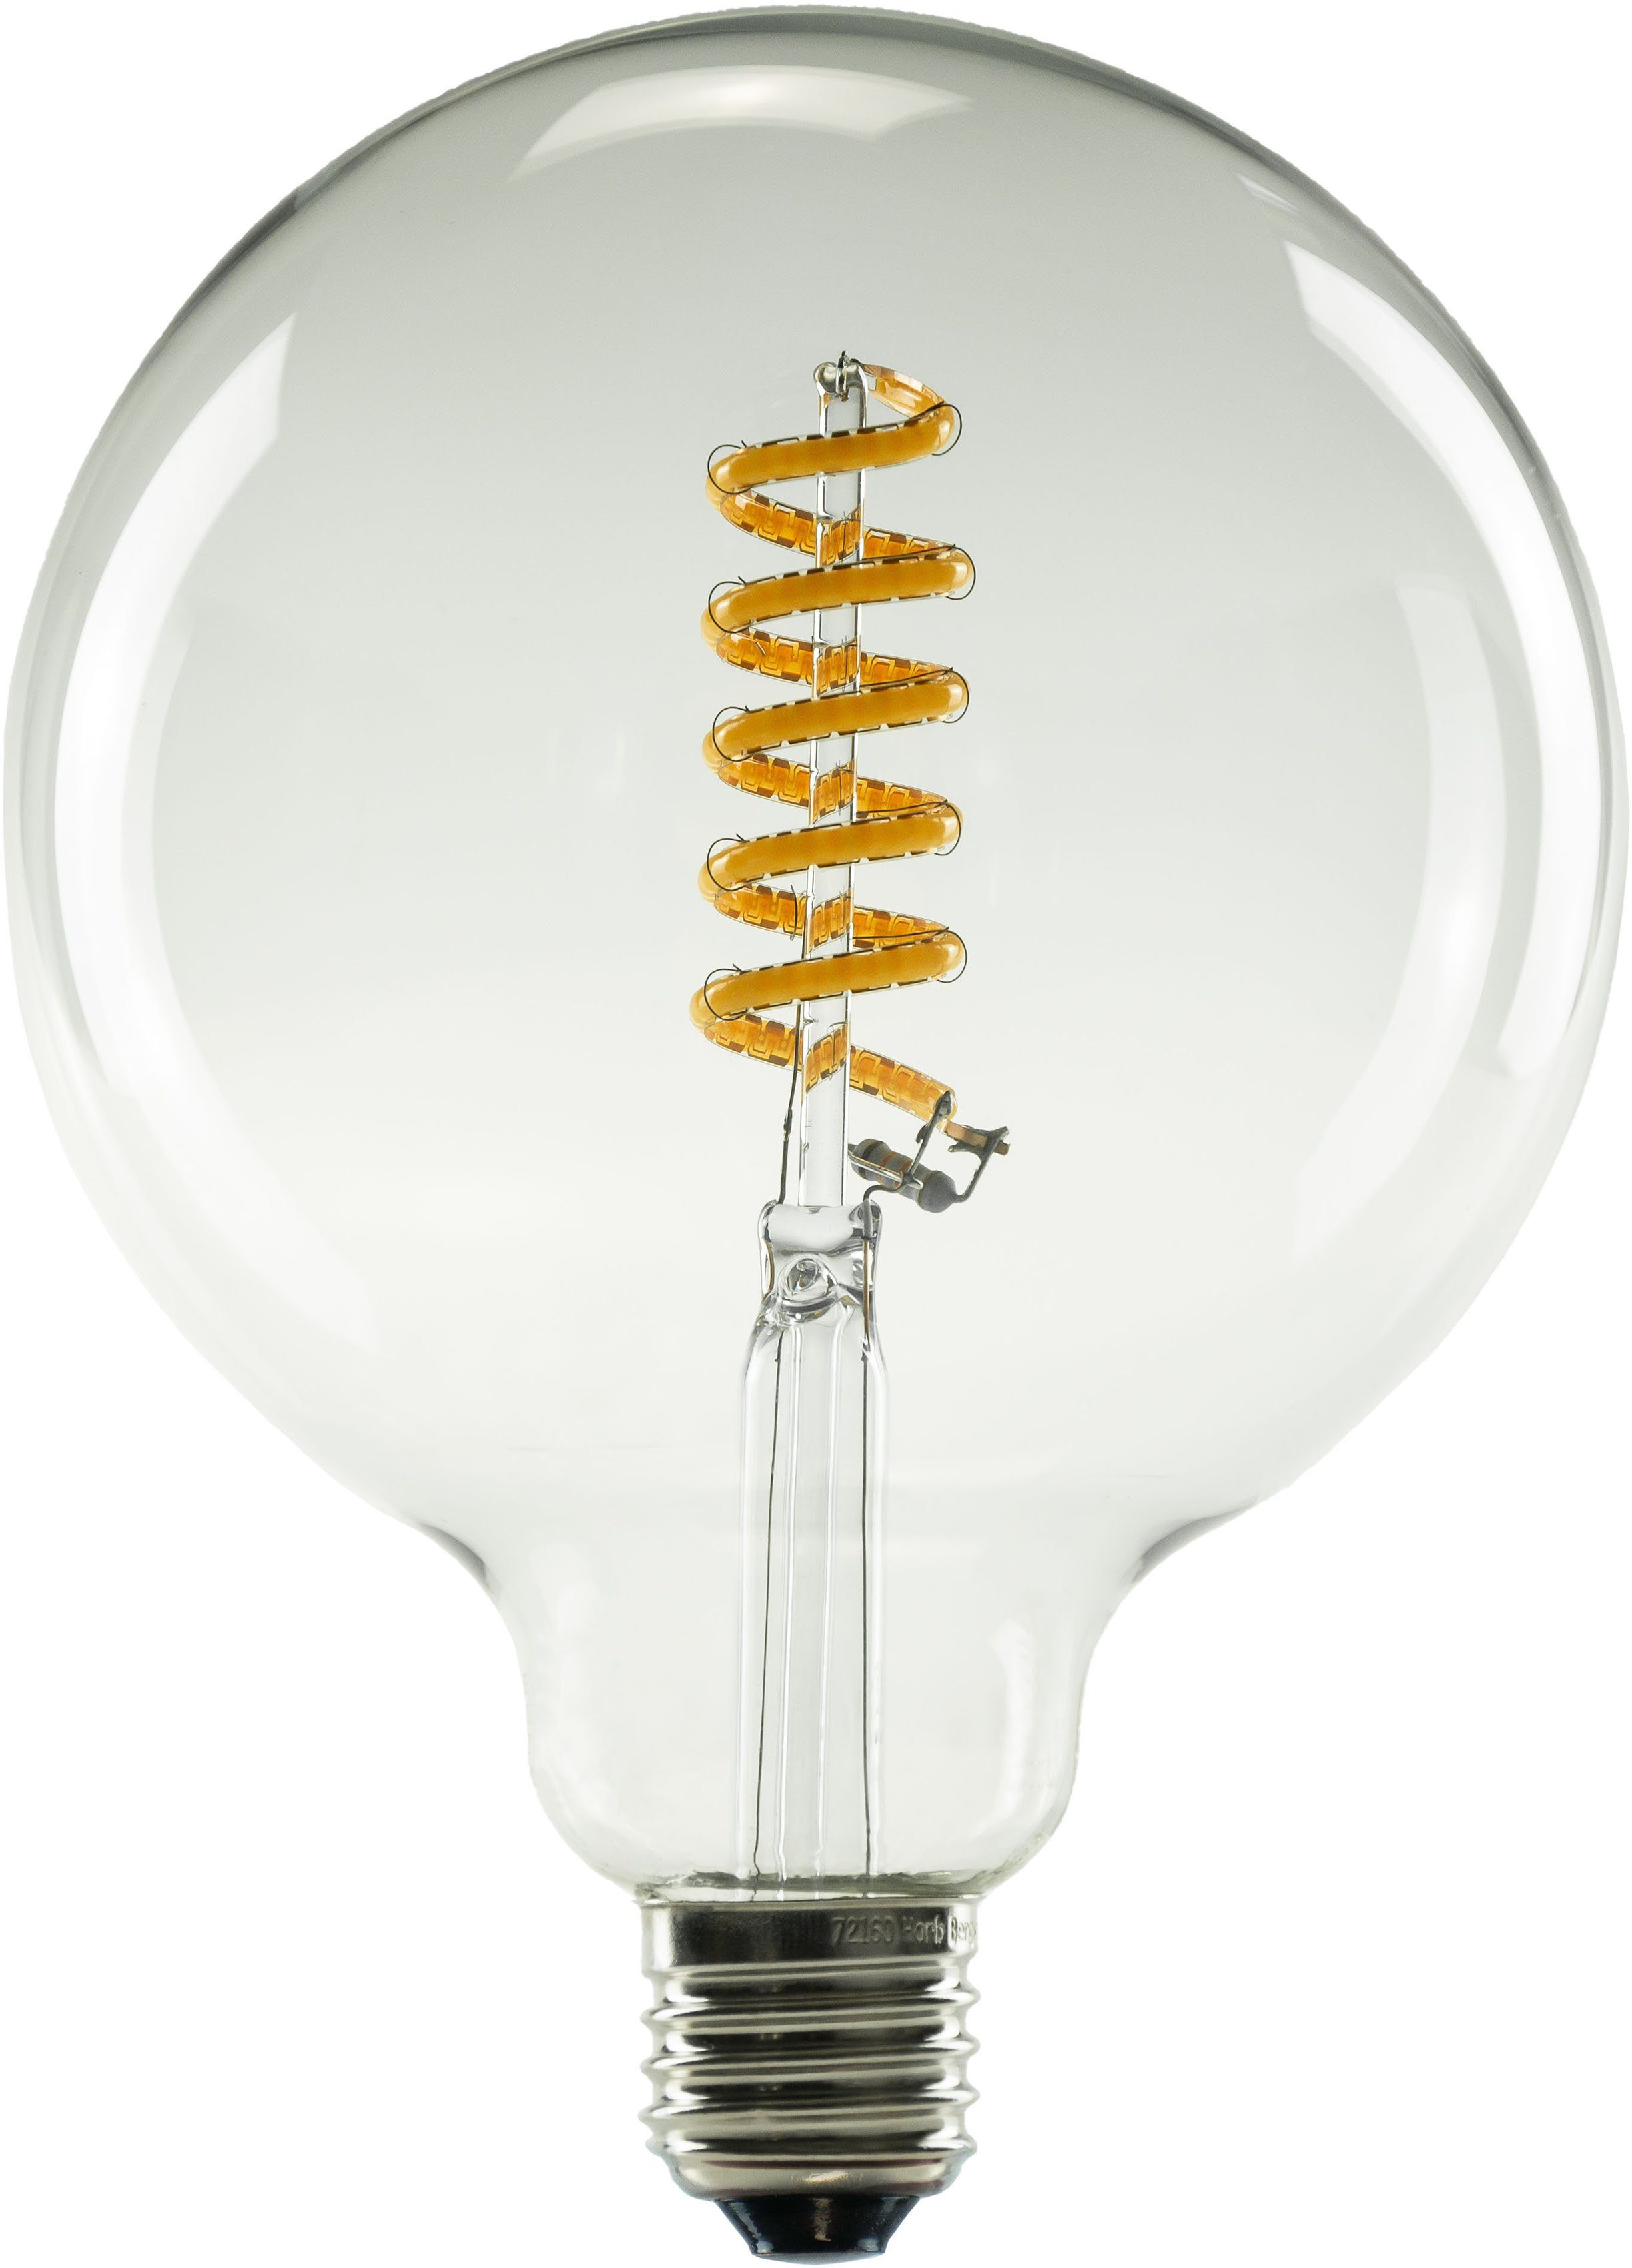 SEGULA LED-Leuchtmittel LED Globe 125 Globe E27, Dimming Spirale Curved 125 E27, klar, klar, Warmweiß, dimmbar, Ambient Curved Spirale